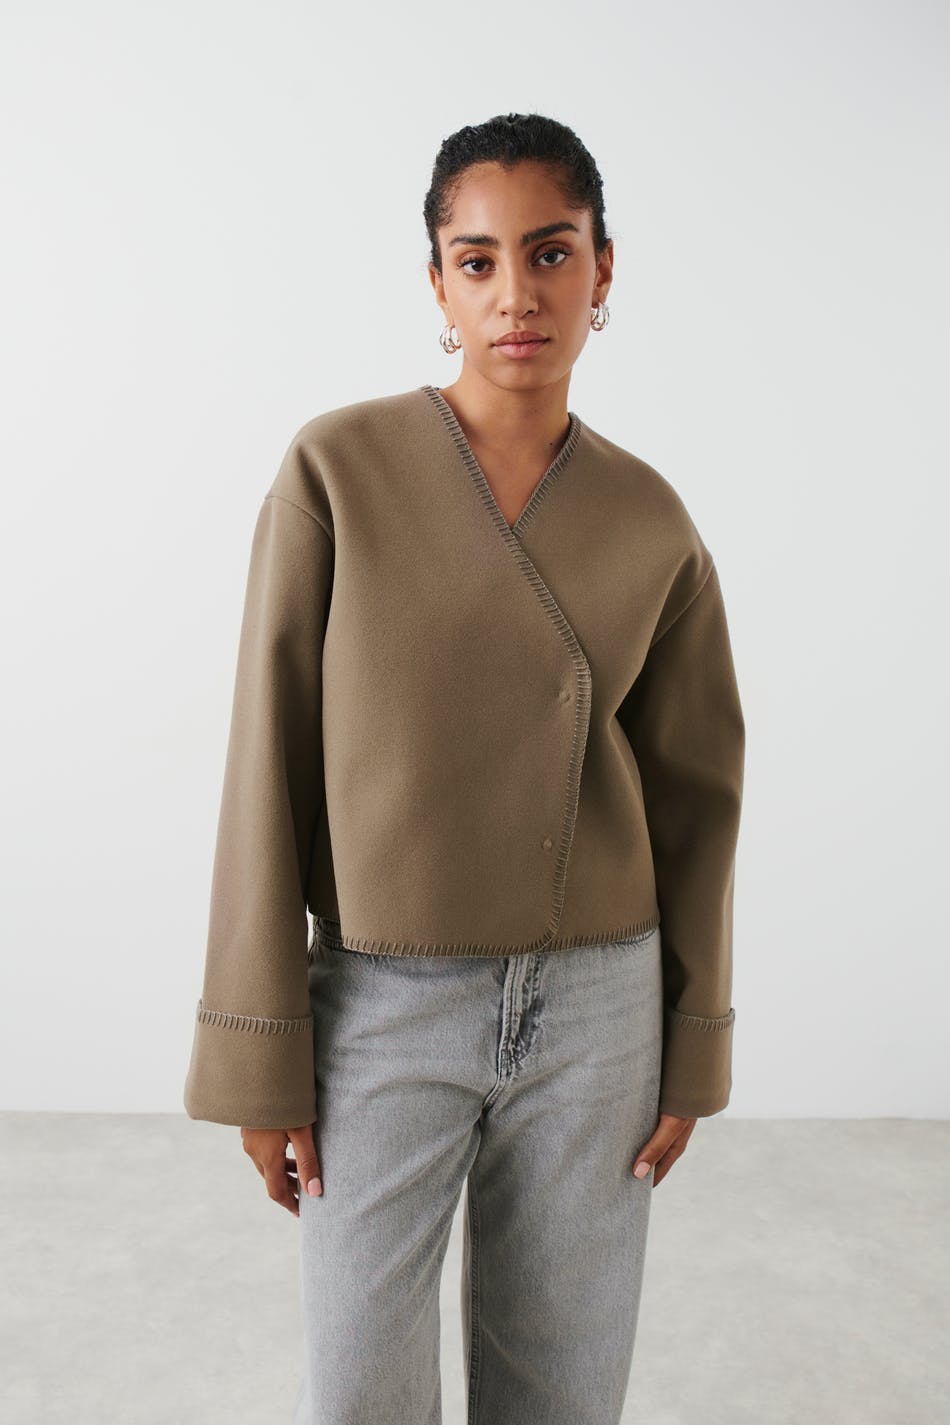 Gina Tricot - Blanket stitch jacket - jackor - Brown - S - Female